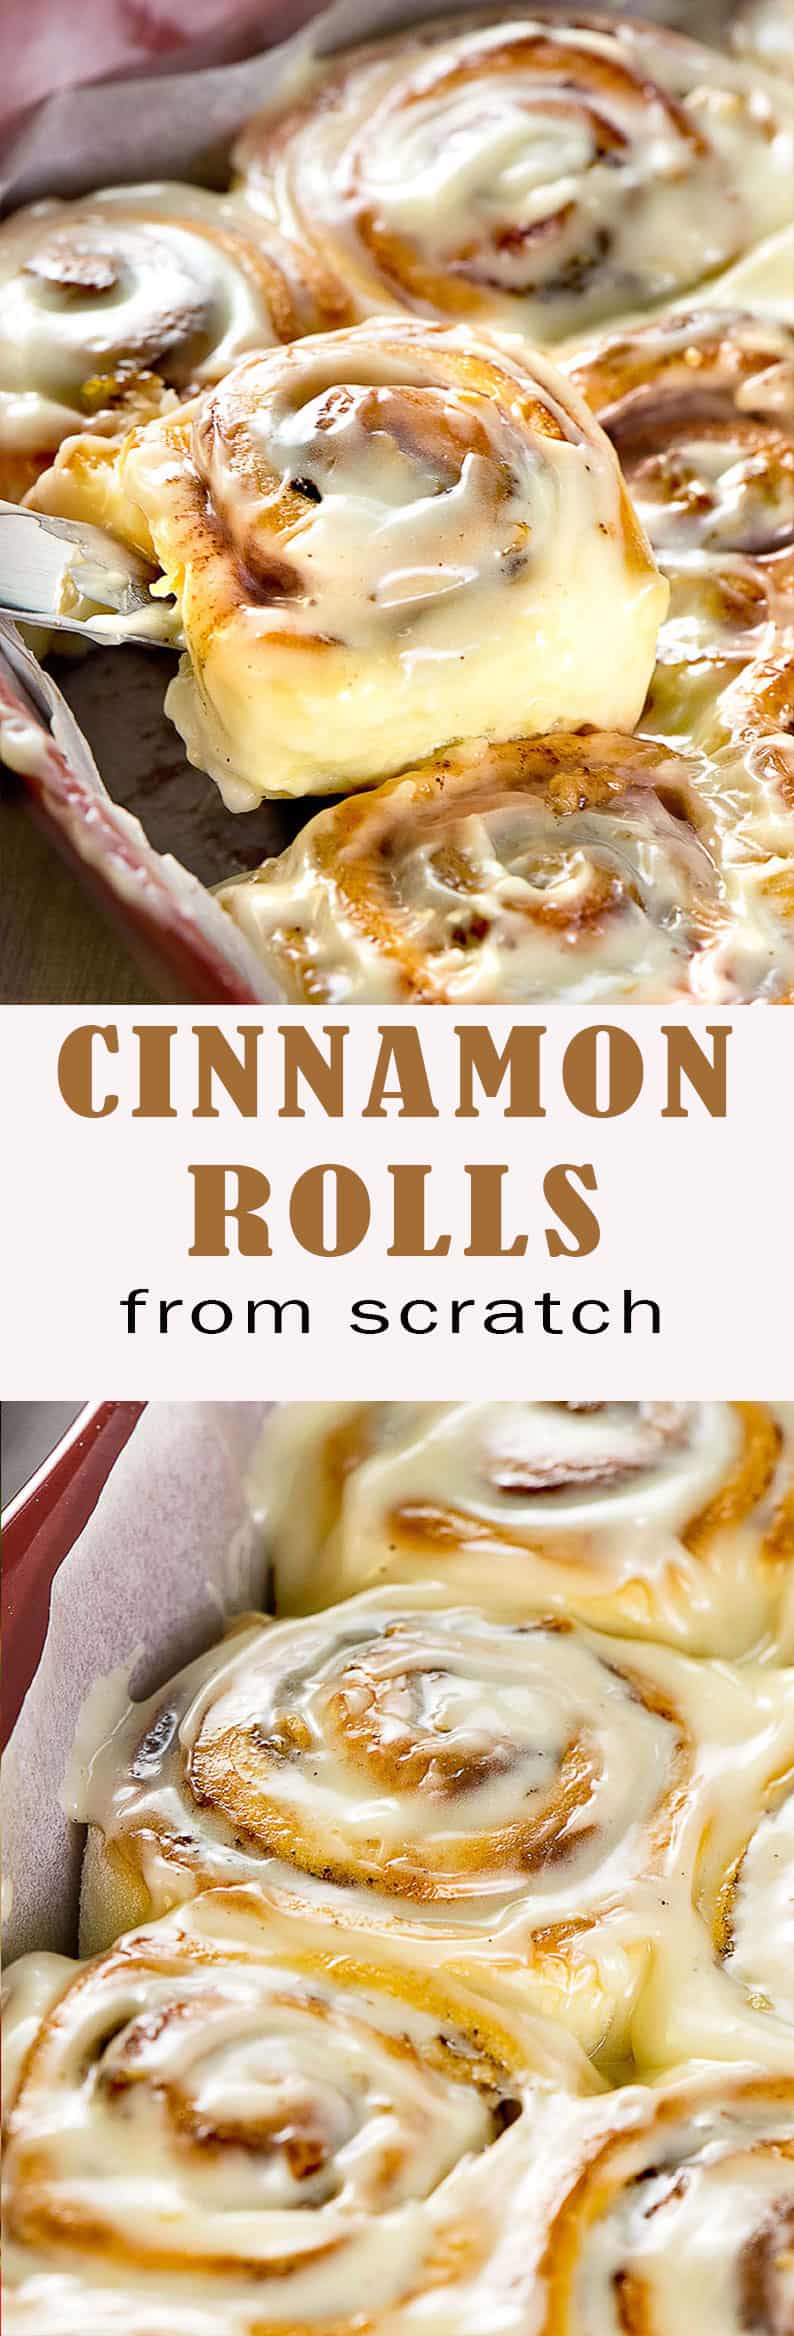 Homemade cinnamon rolls